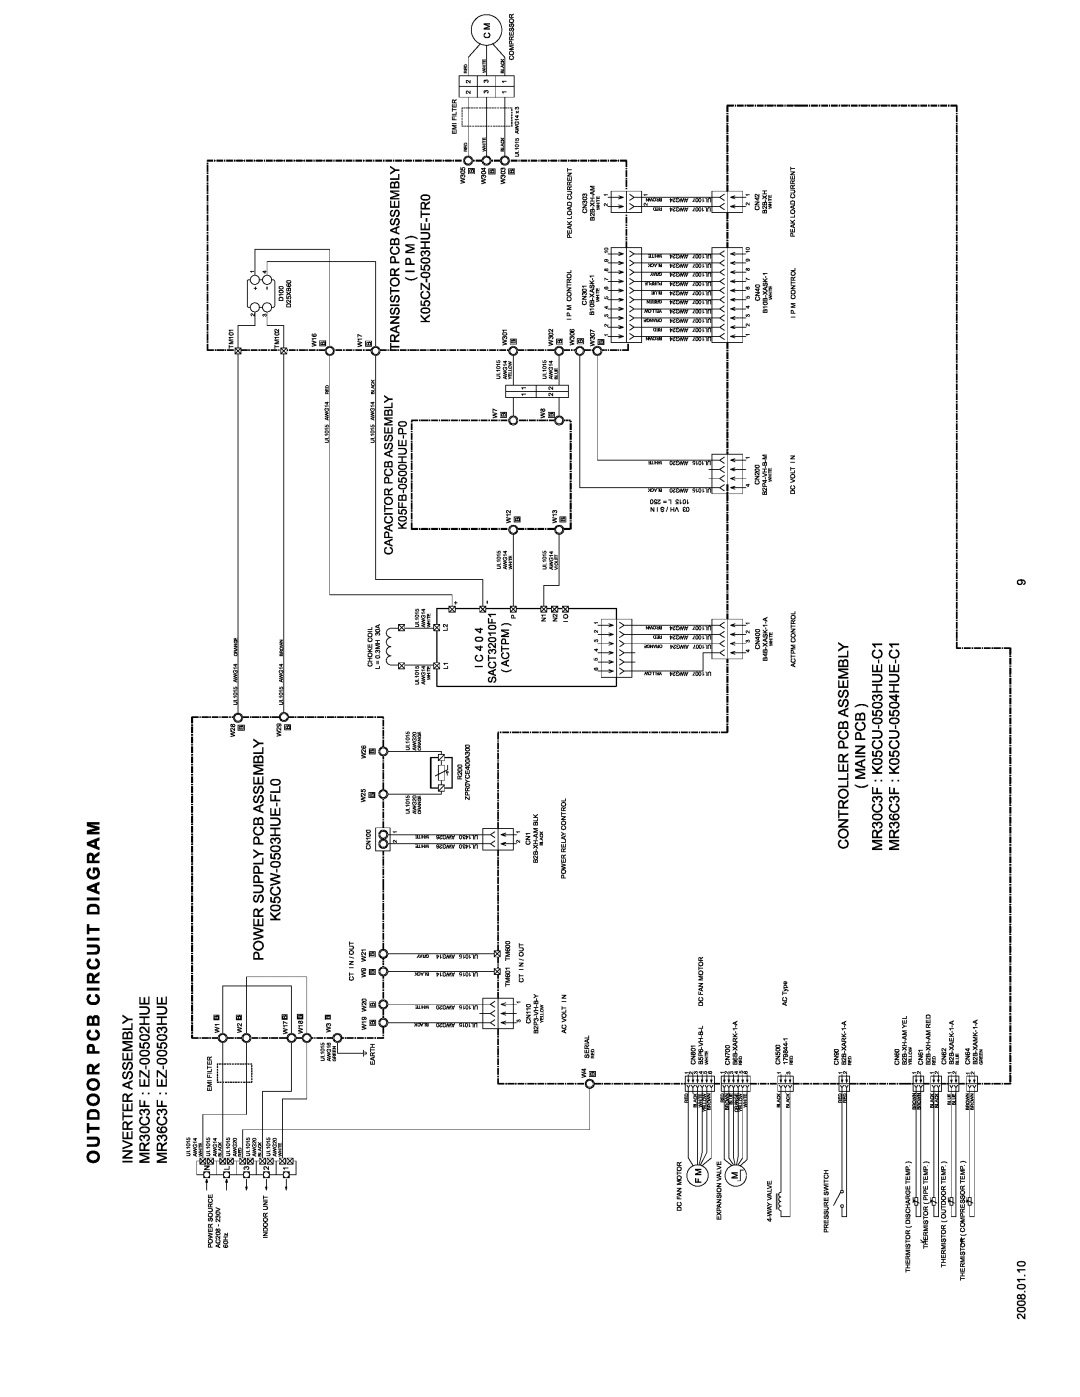 Friedrich M30CF Outdoor Pcb Circuit Diagram, INVERTER ASSEMBLY MR30C3F EZ-00502HUE, MR36C3F EZ-00503HUE, K05CW-0503HUE-FL0 